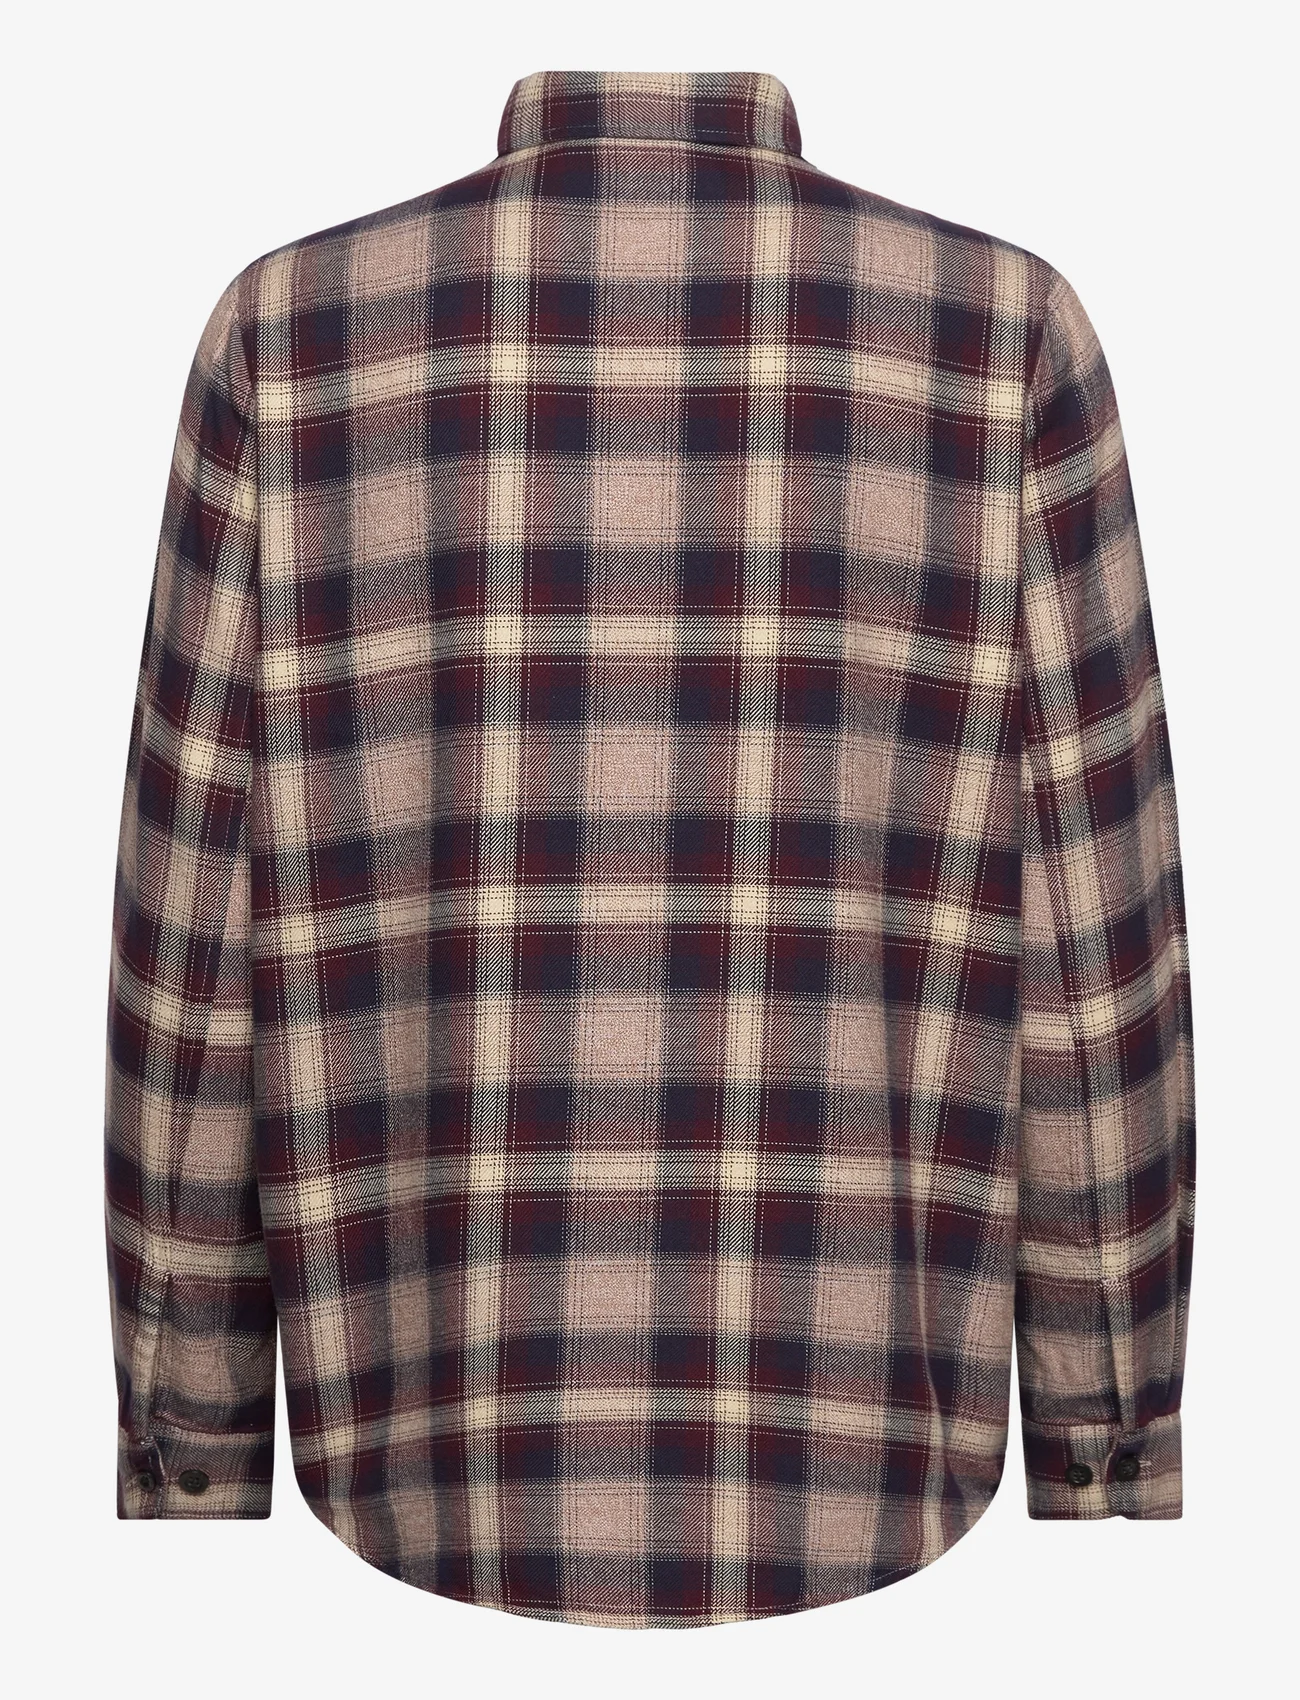 Peak Performance - W Cotton Flannel Shirt-141 CHECK - marškiniai ilgomis rankovėmis - 141 check - 1